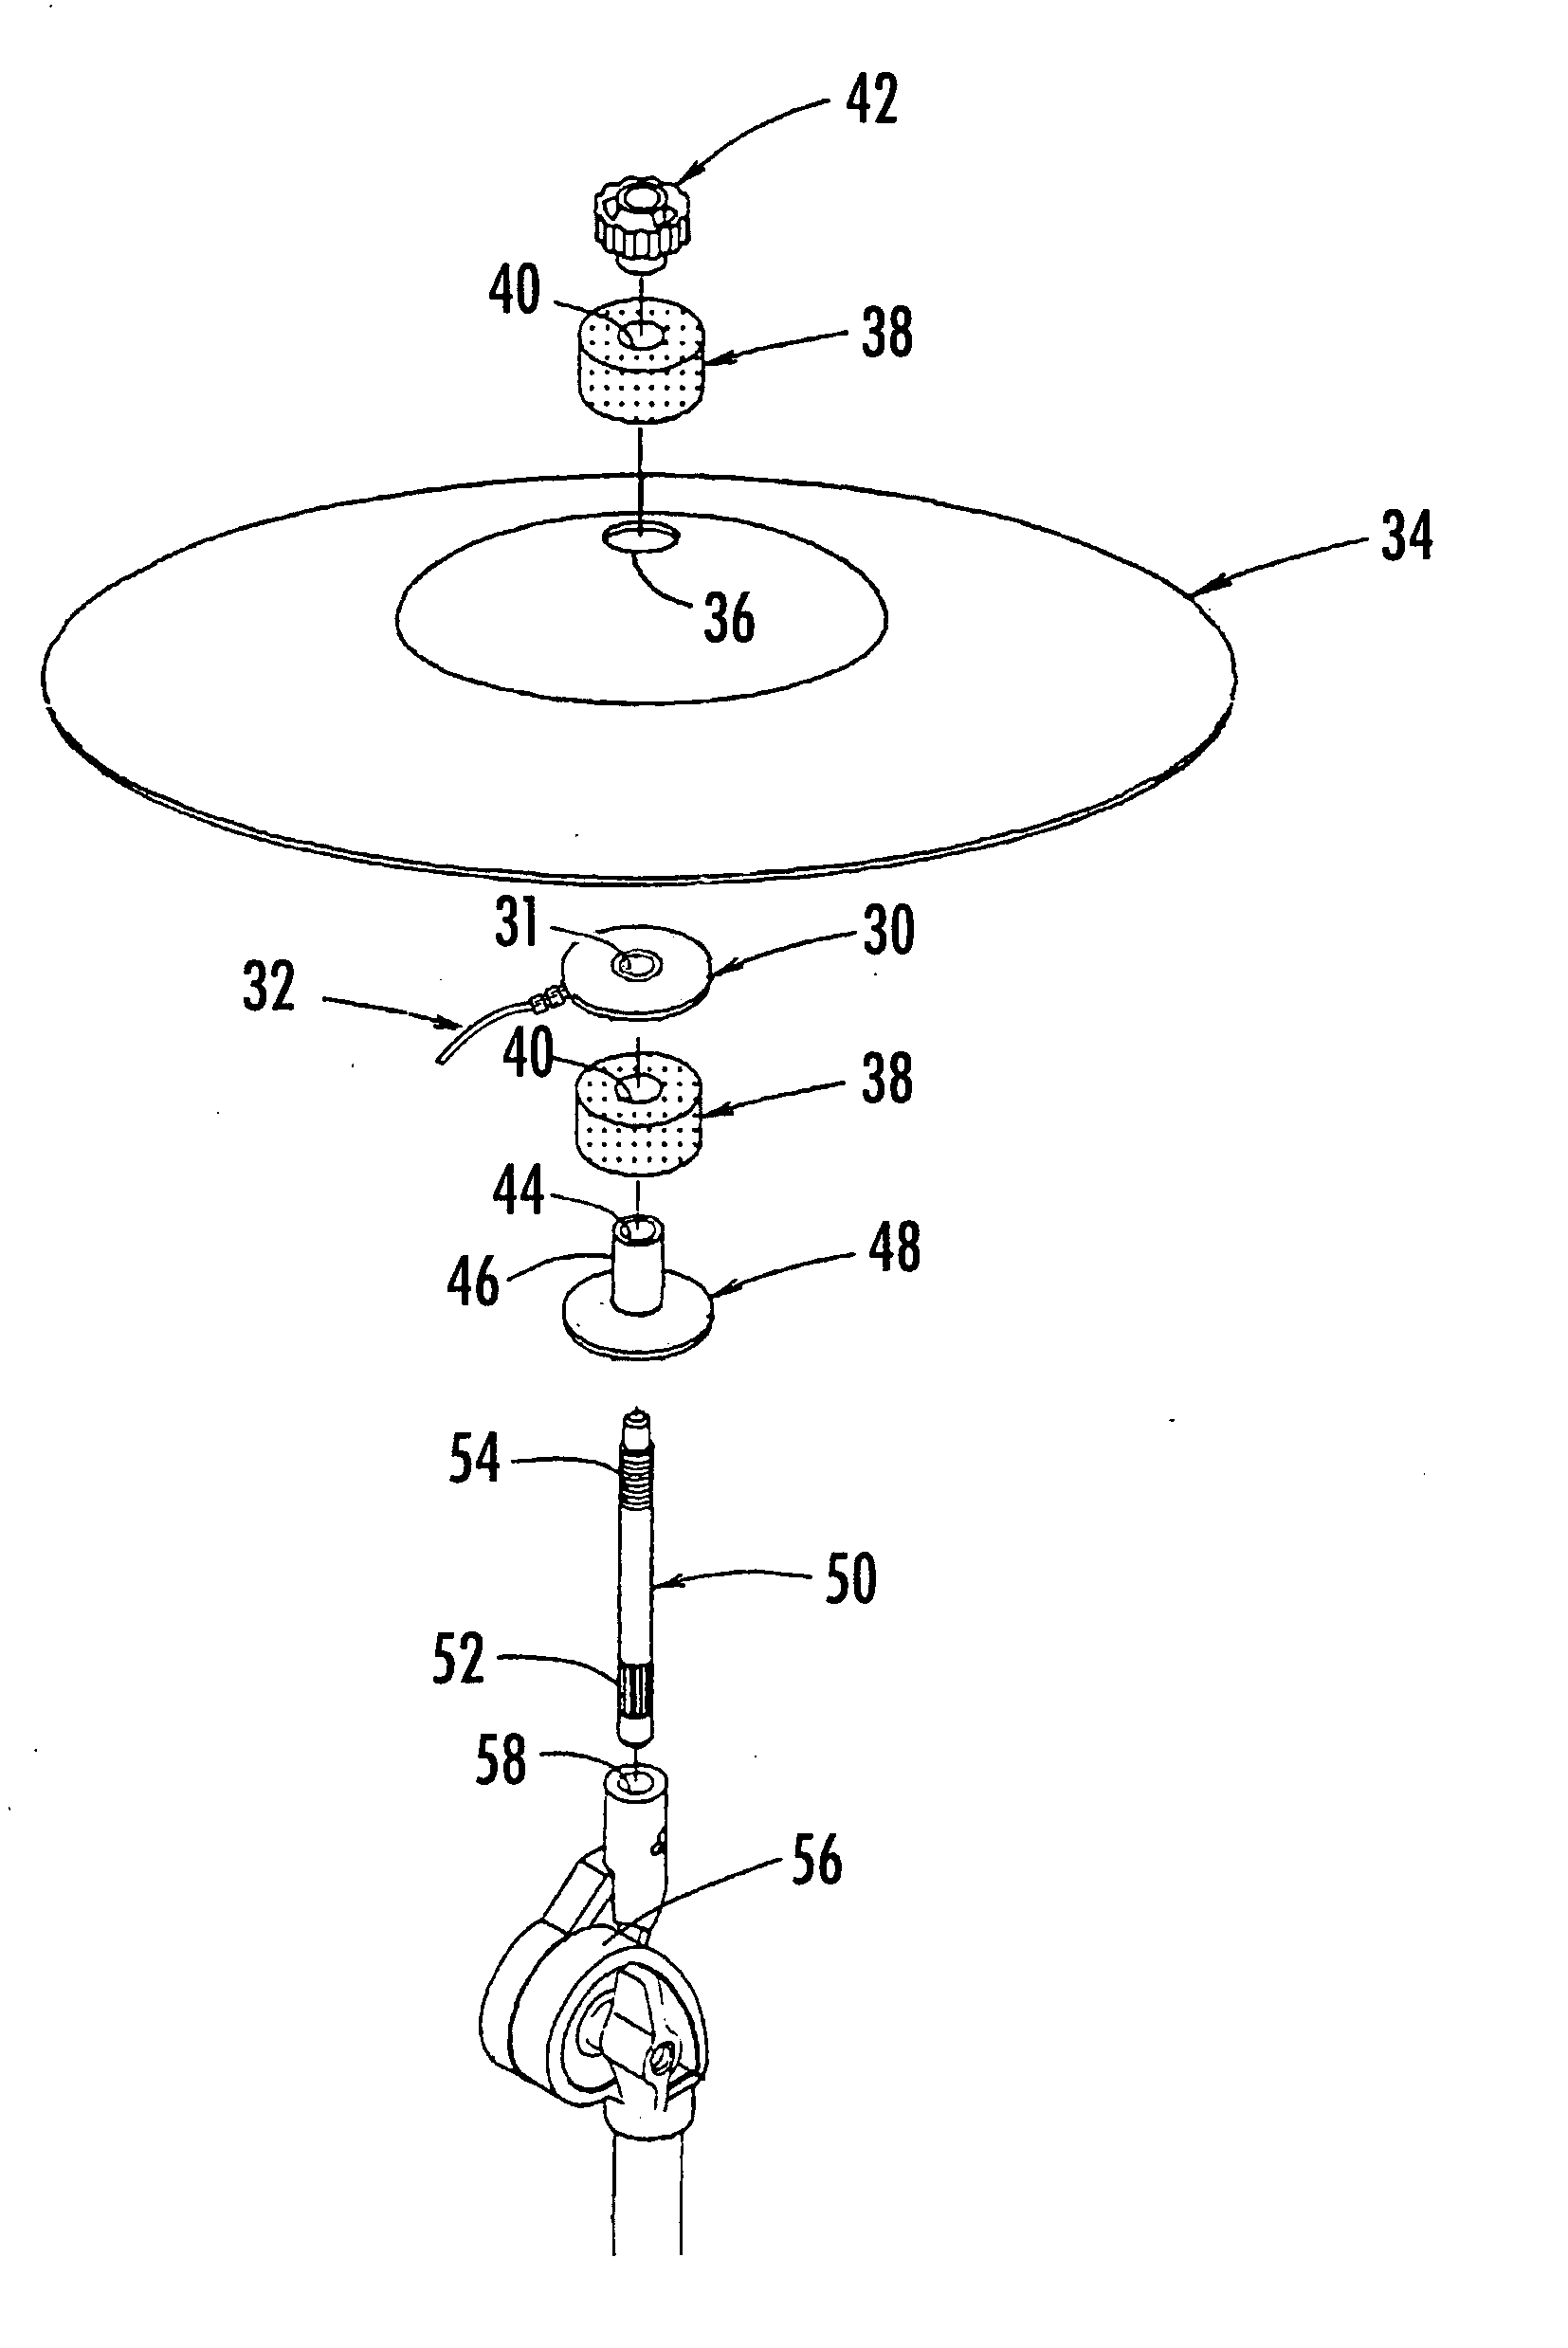 Percussion transducer